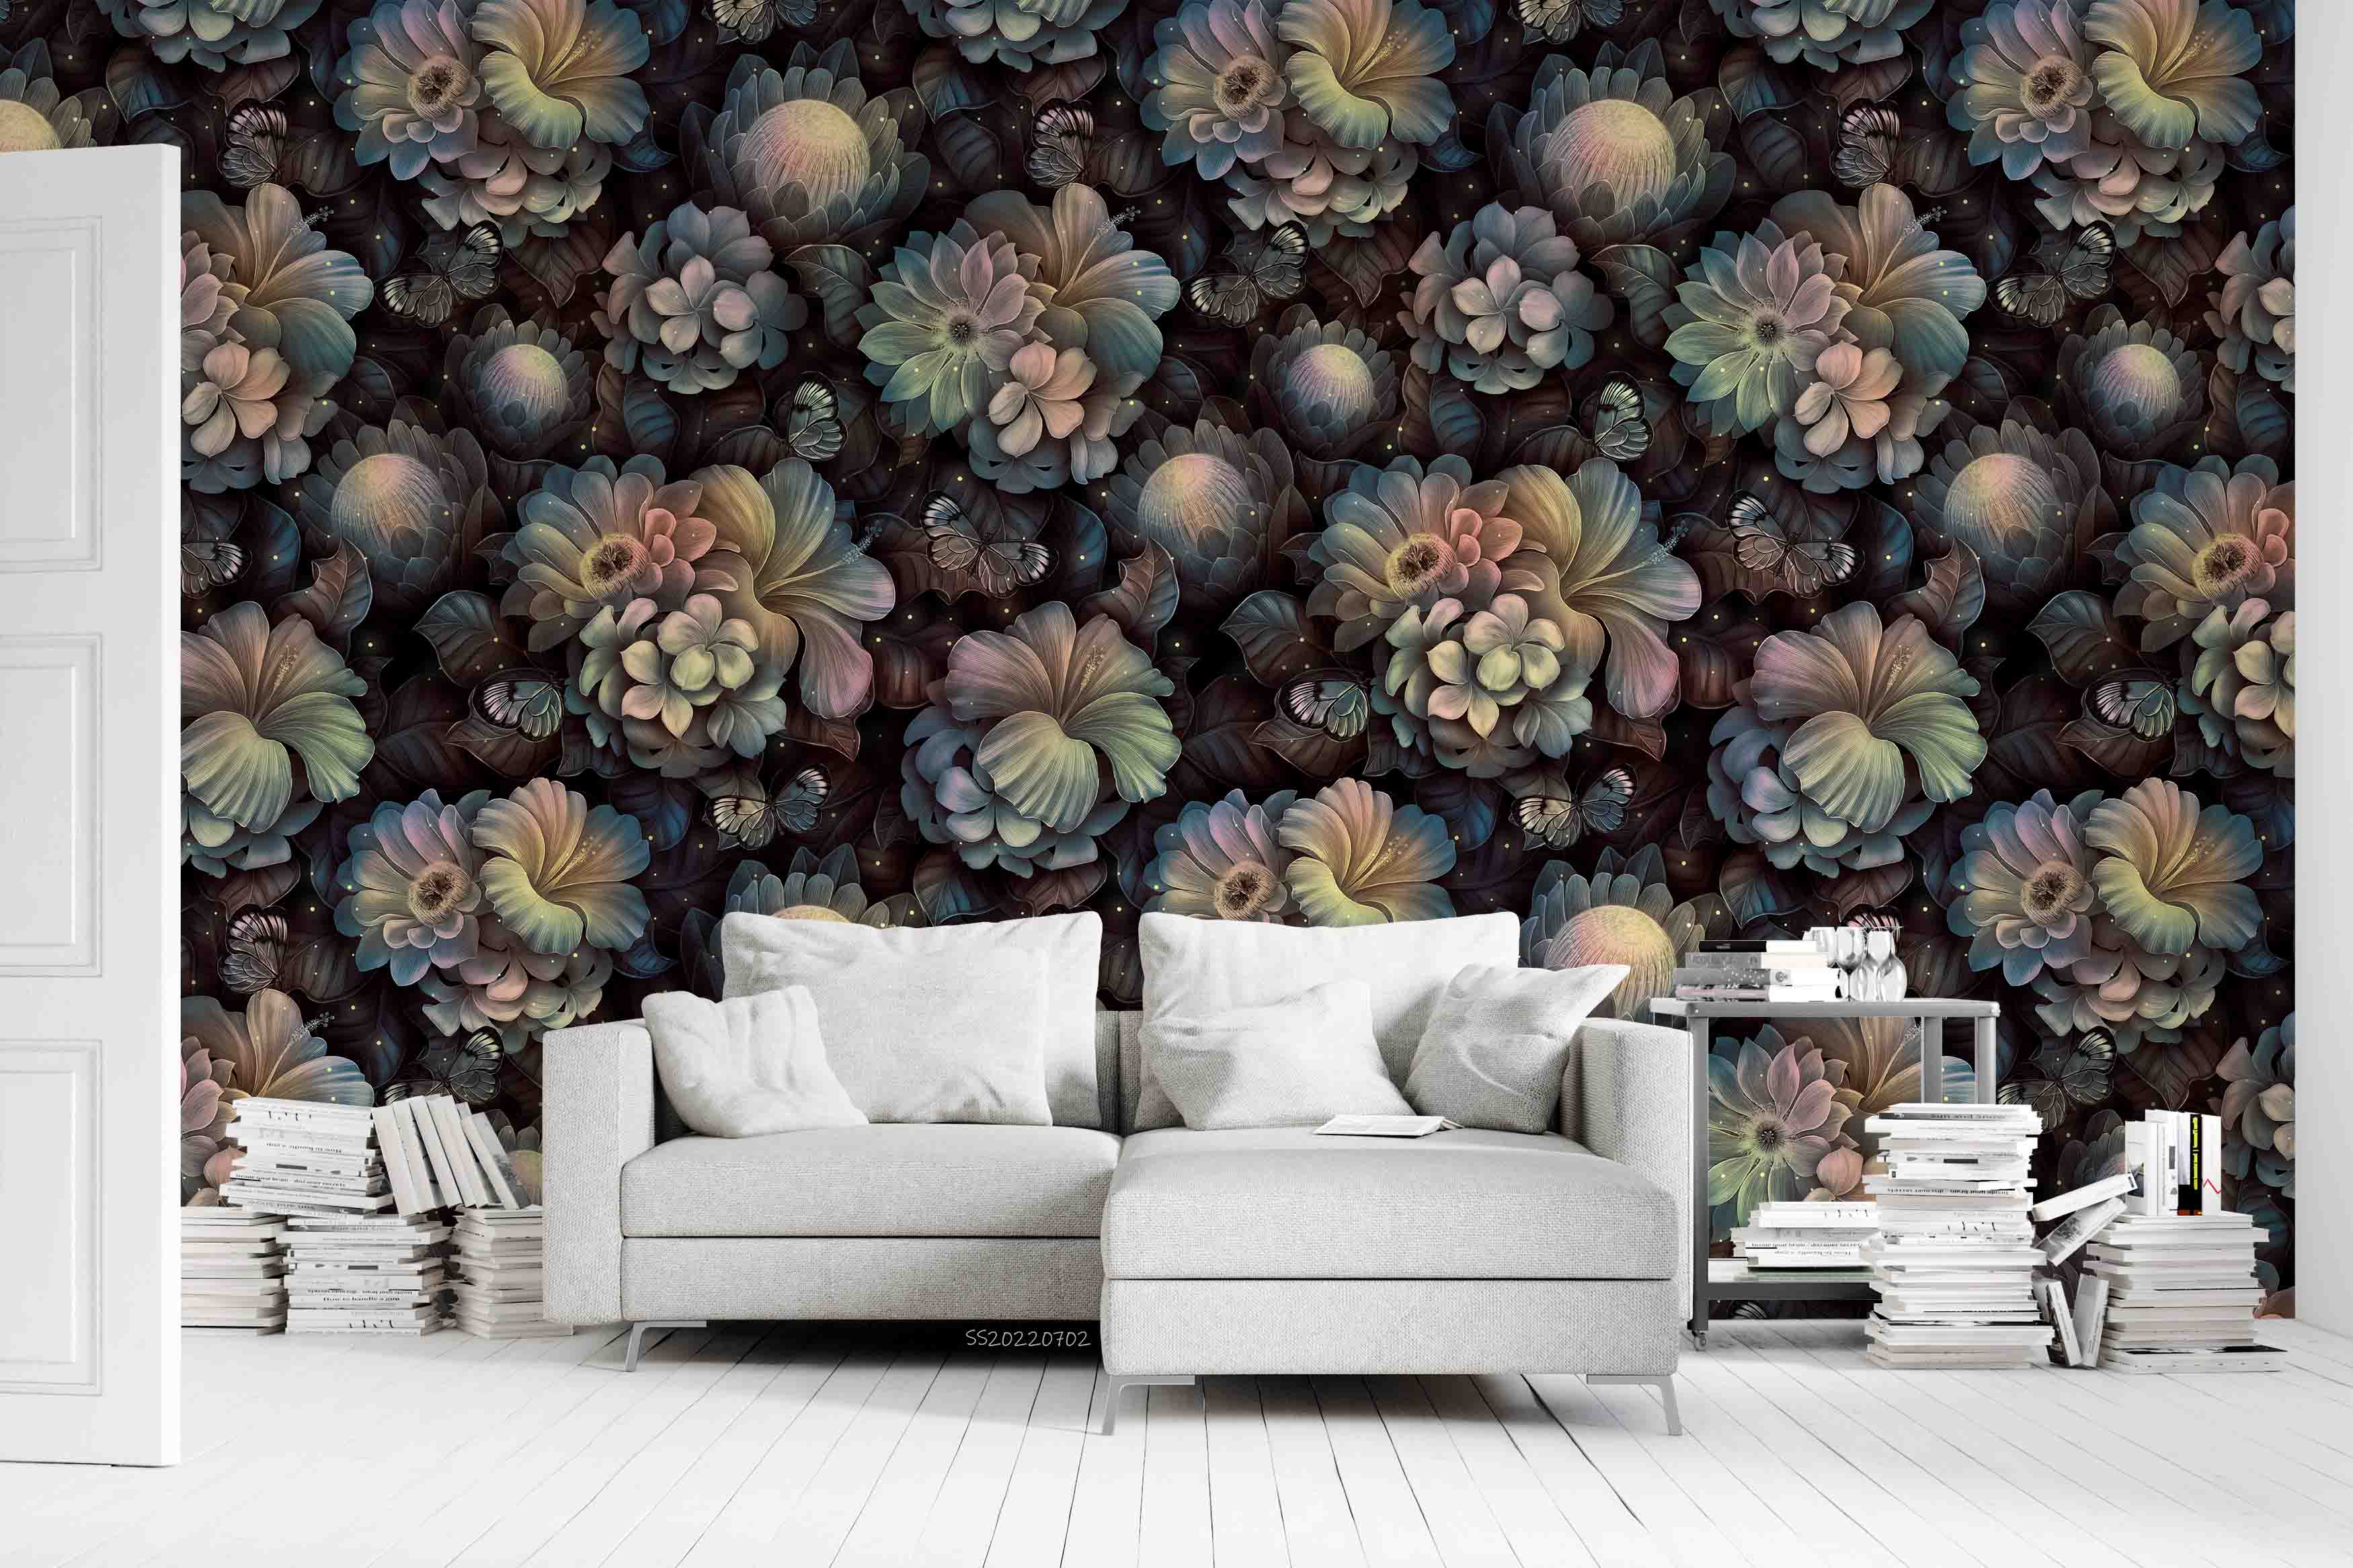 3D Vintage Floral Background Wall Mural Wallpaper GD 5071- Jess Art Decoration